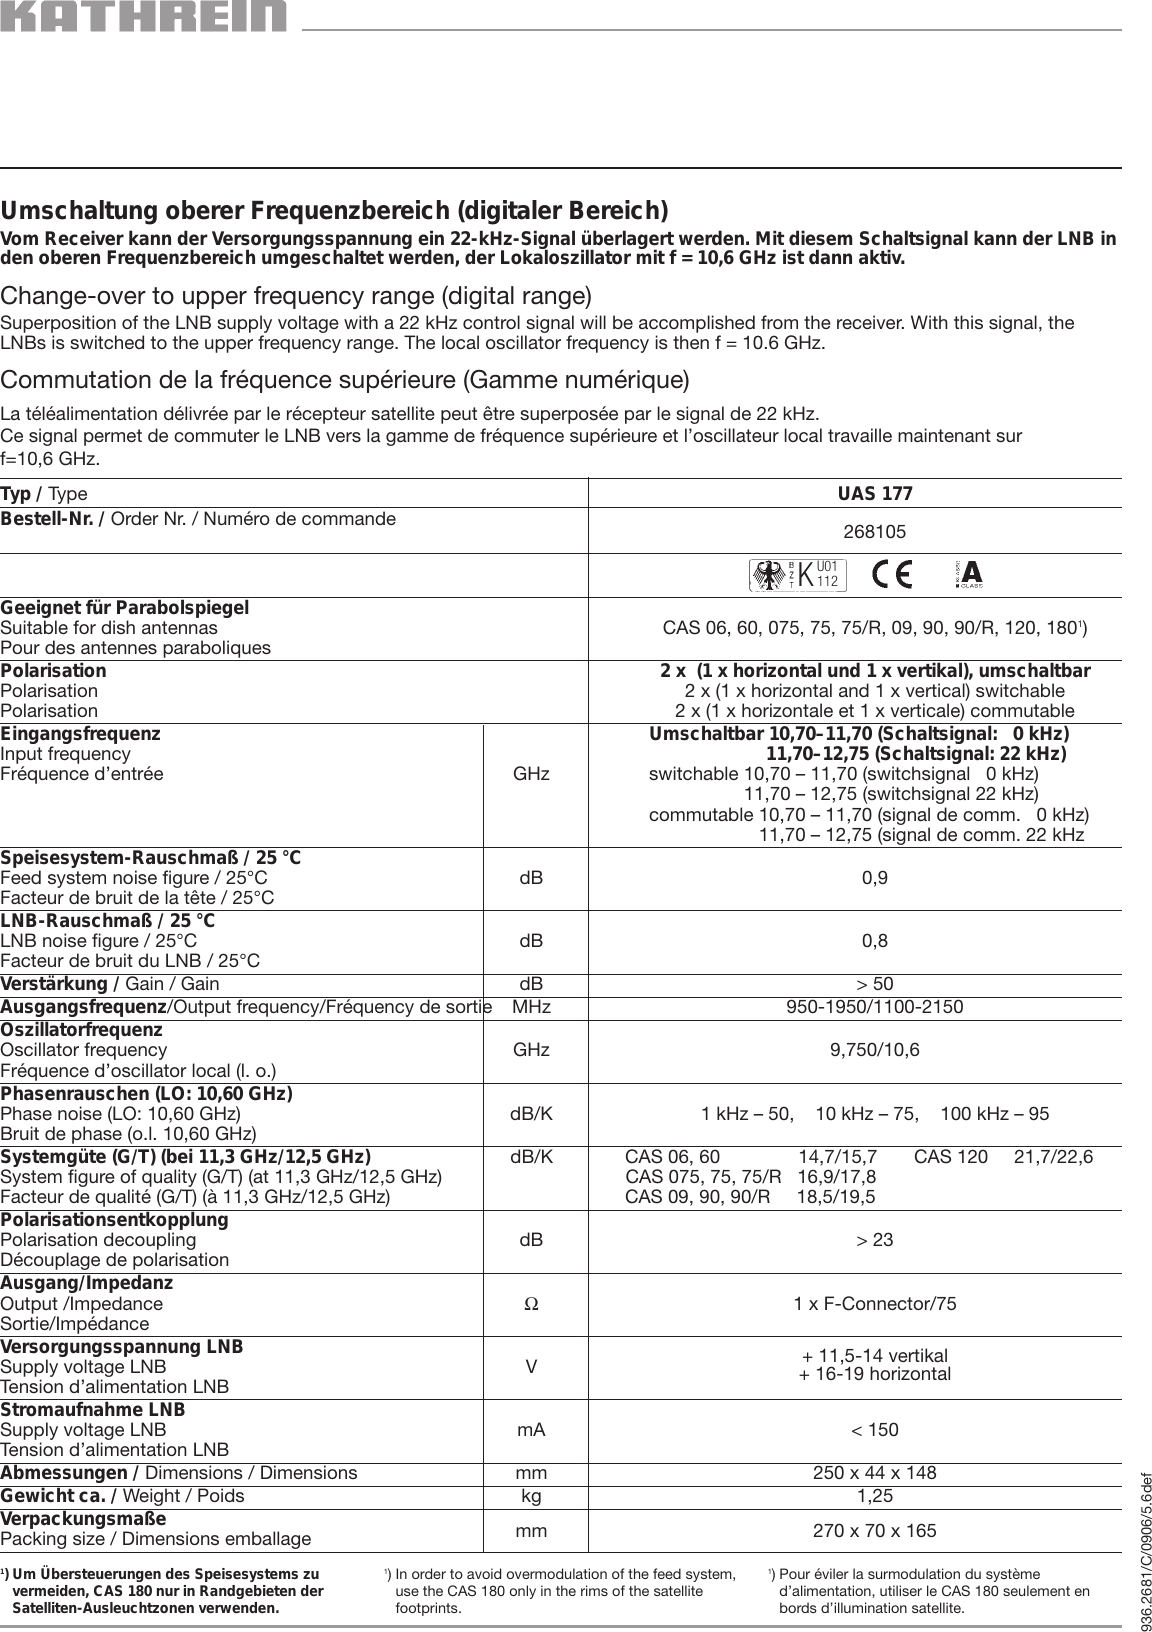 Page 5 of 6 - Kathrein Kathrein-Universal-Feed-Systems-Uas-177-Users-Manual- 9362681c, Universal-Speisesystem Mit 1 Ausgang UAS 177  Kathrein-universal-feed-systems-uas-177-users-manual